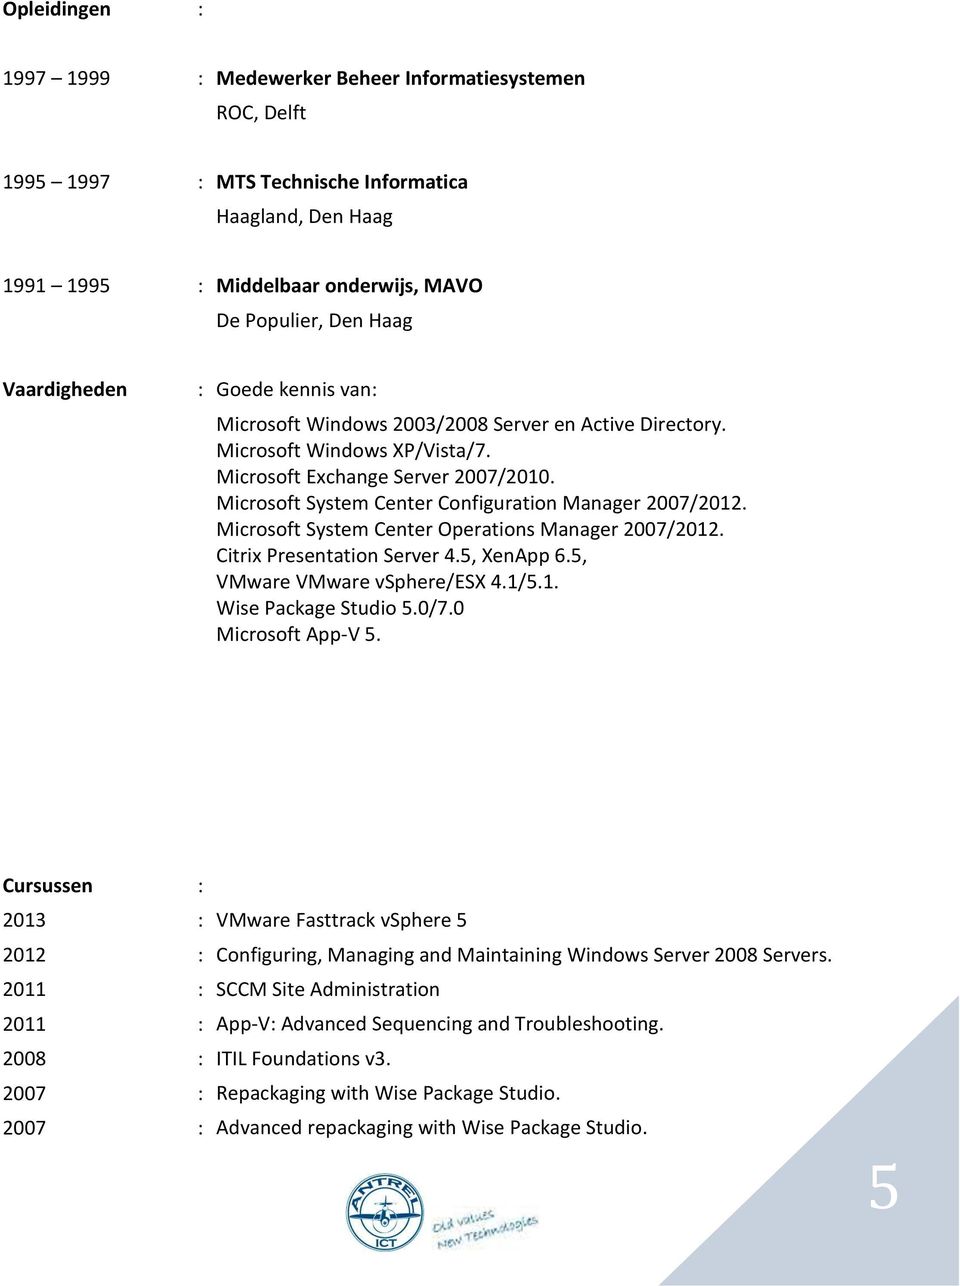 Microsoft System Center Configuration Manager 2007/2012. Microsoft System Center Operations Manager 2007/2012. Citrix Presentation Server 4.5, XenApp 6.5, VMware VMware vsphere/esx 4.1/5.1. Wise Package Studio 5.